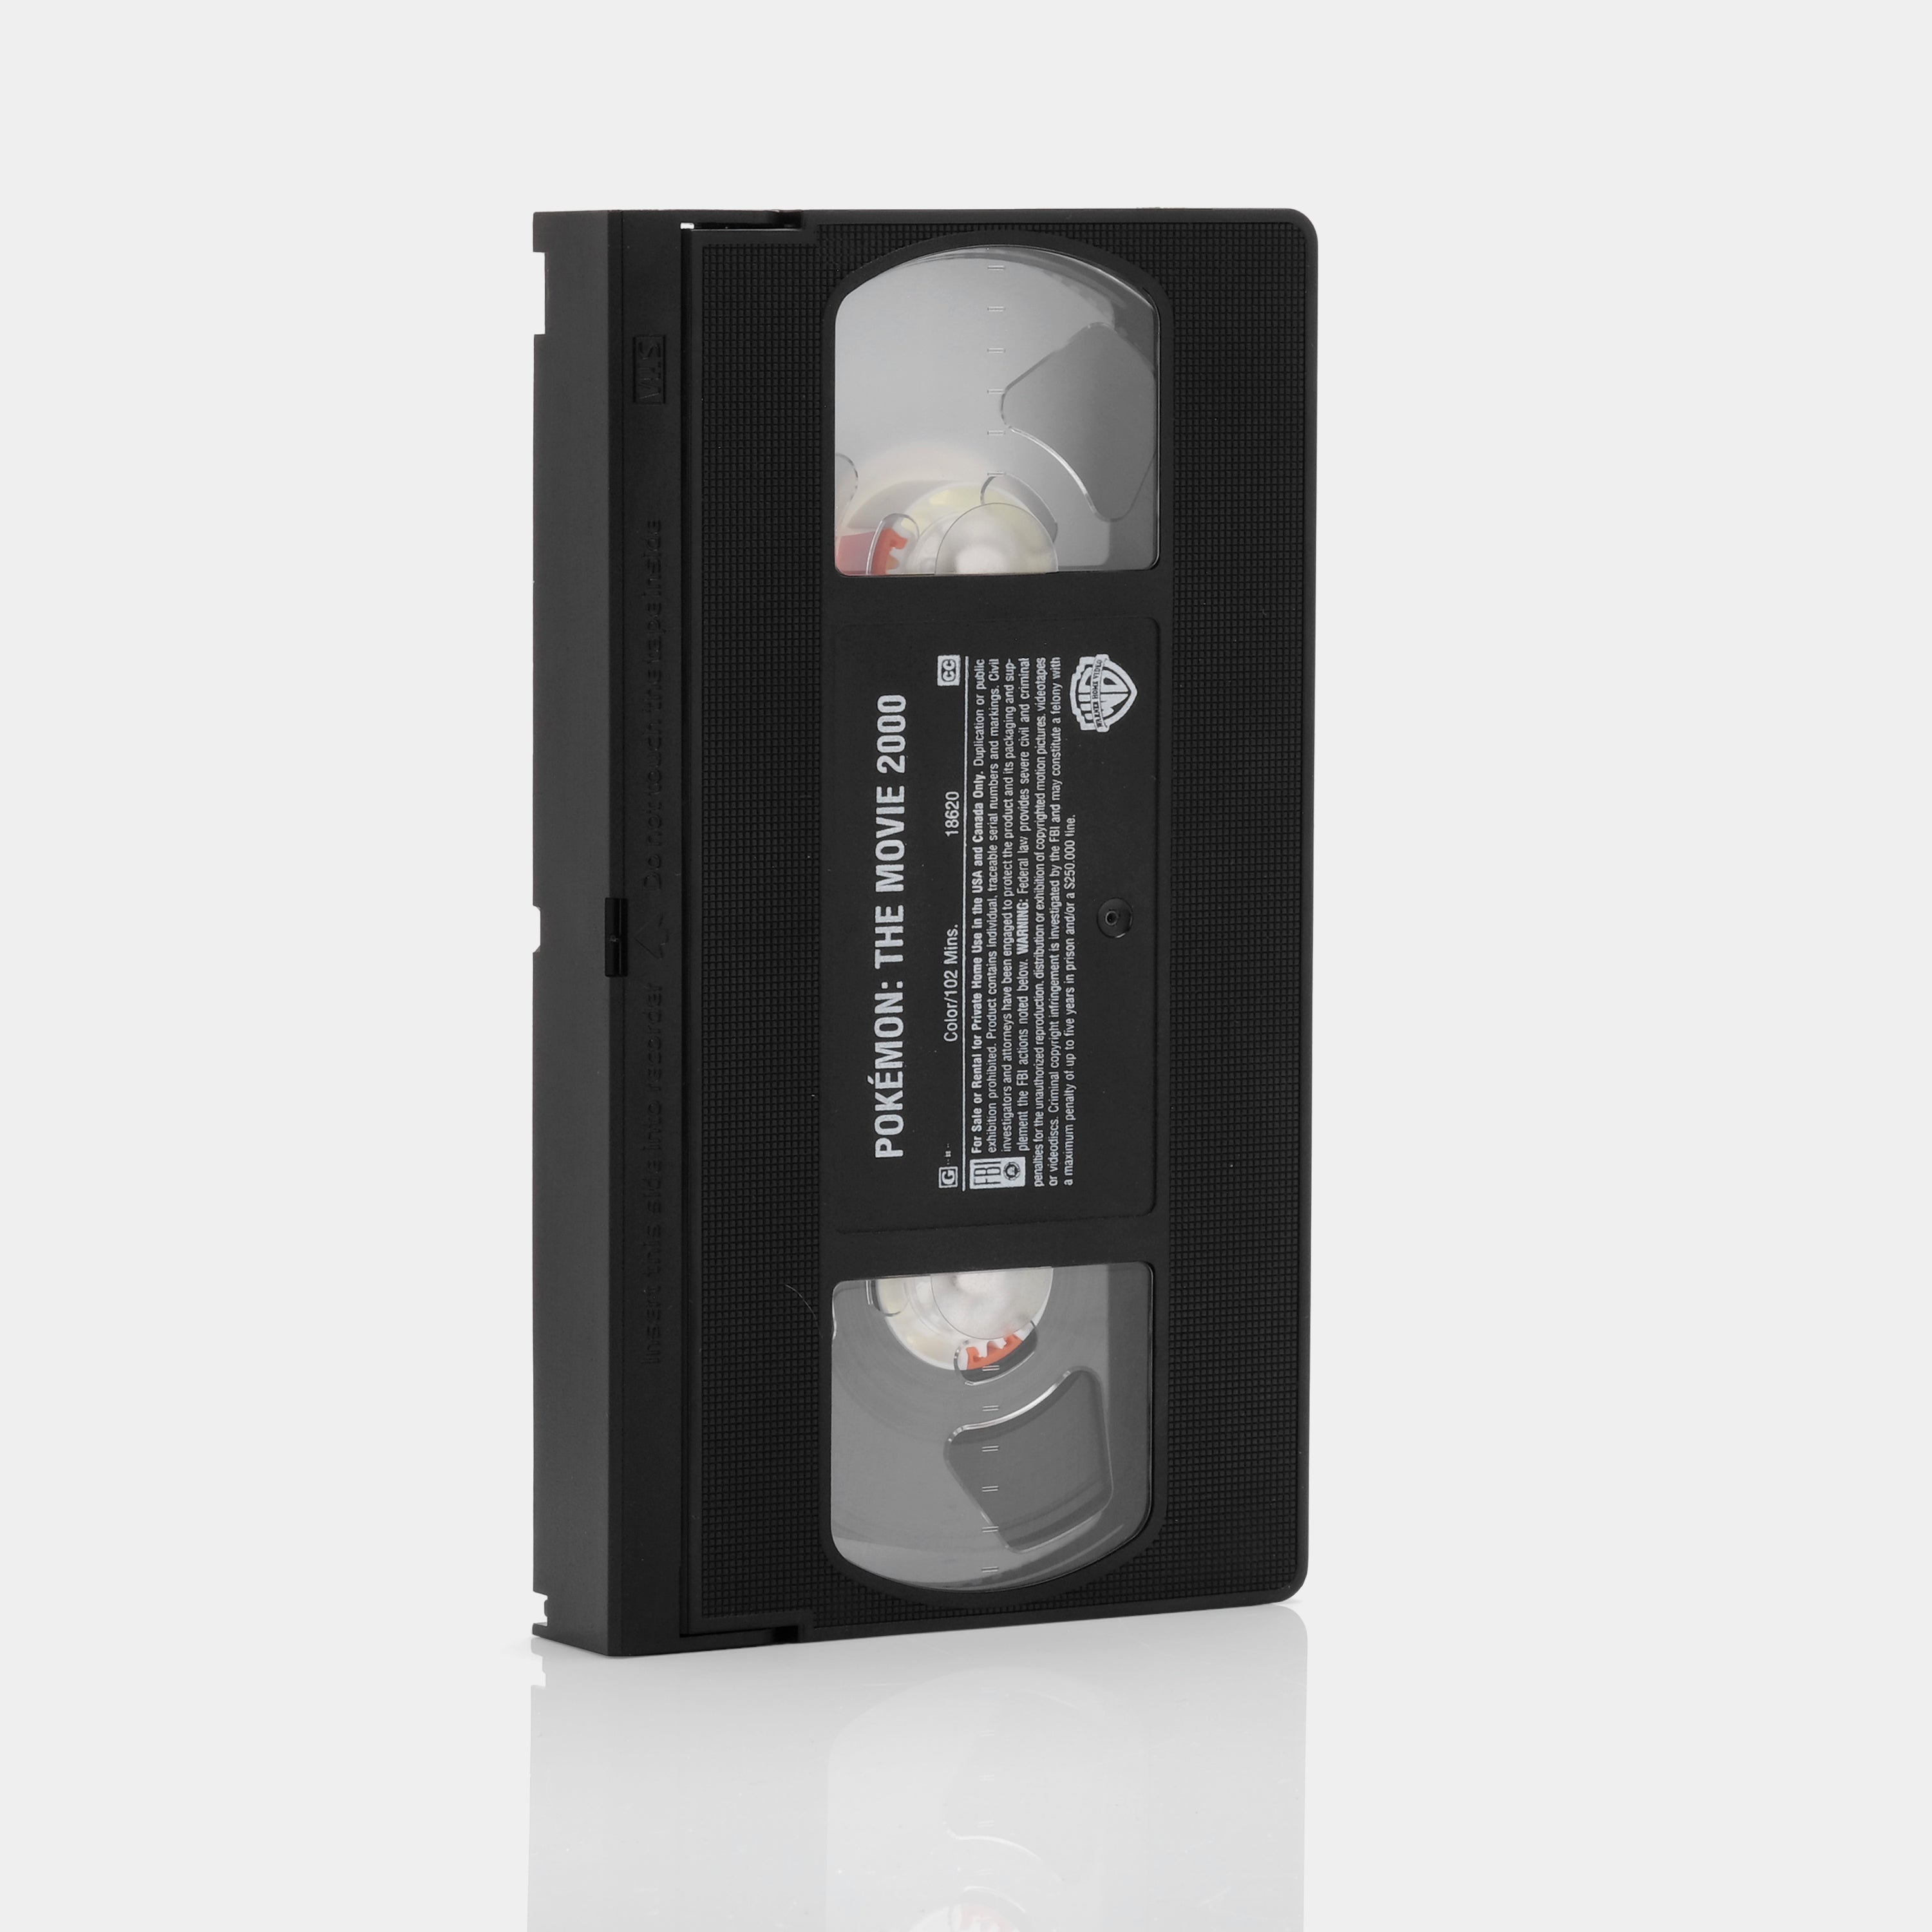 Pokémon The Movie 2000 VHS Tape